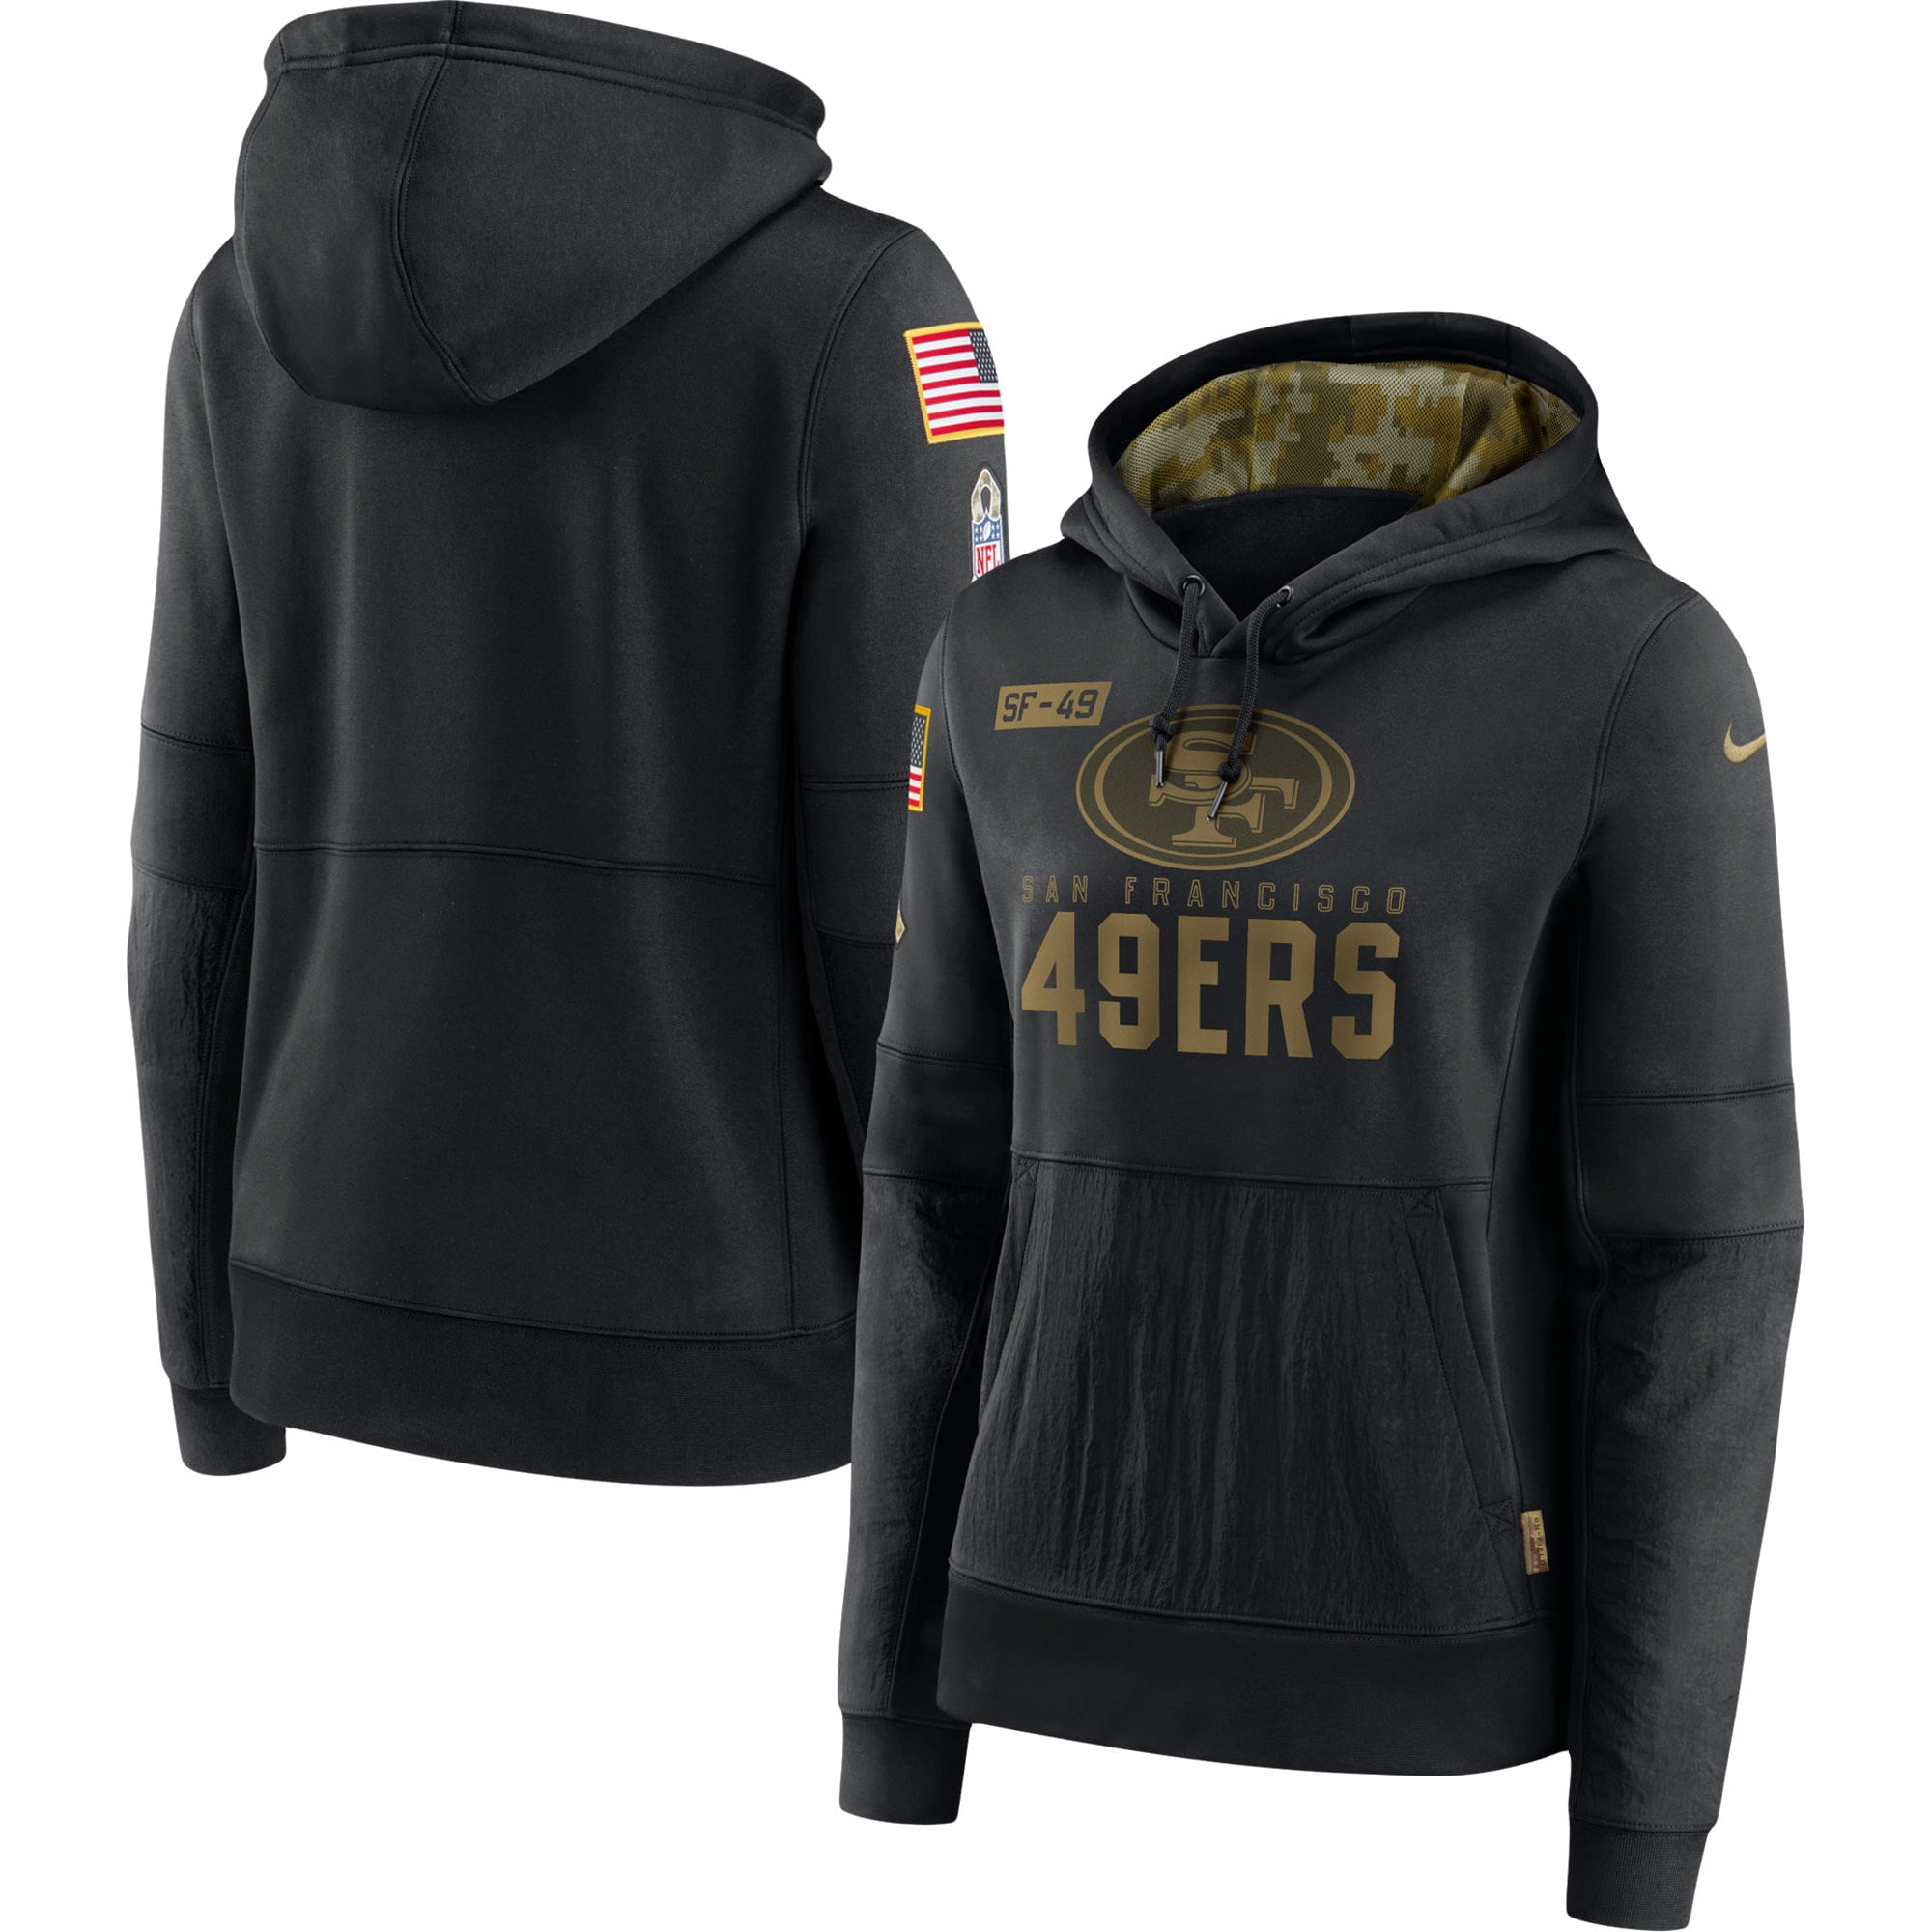 AJF,49ers military hoodie,nalan.com.sg